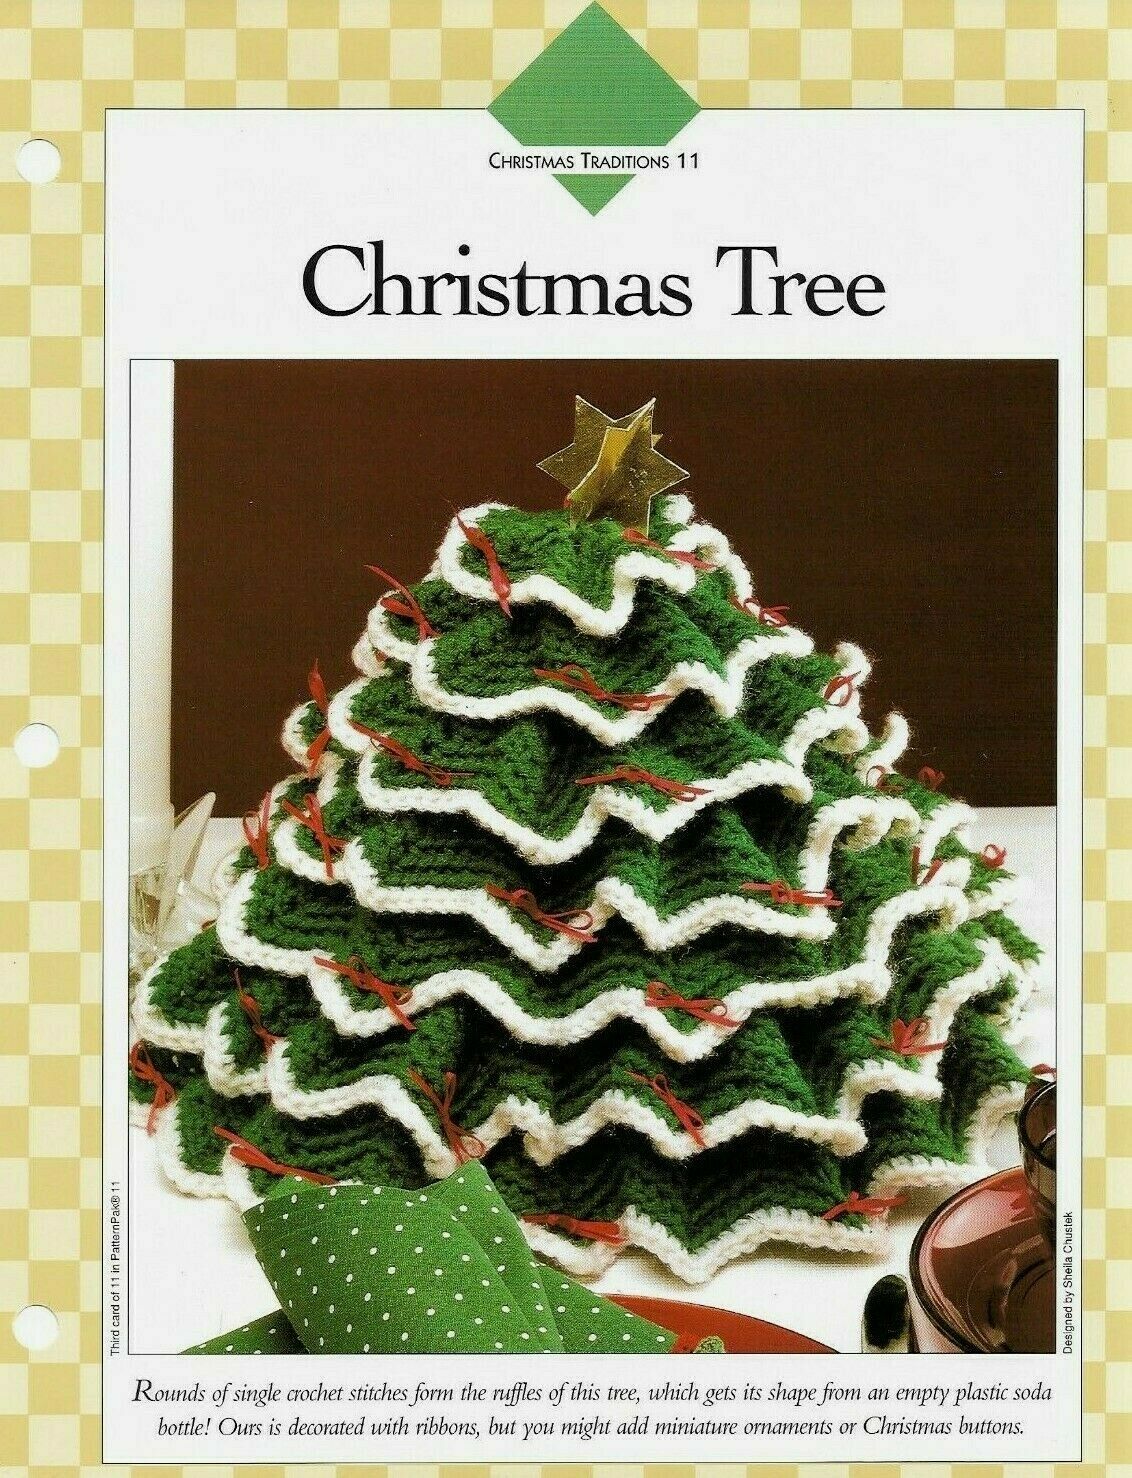 New Christmas Tree 8" Vanna's Club Crochet Pattern Instructions